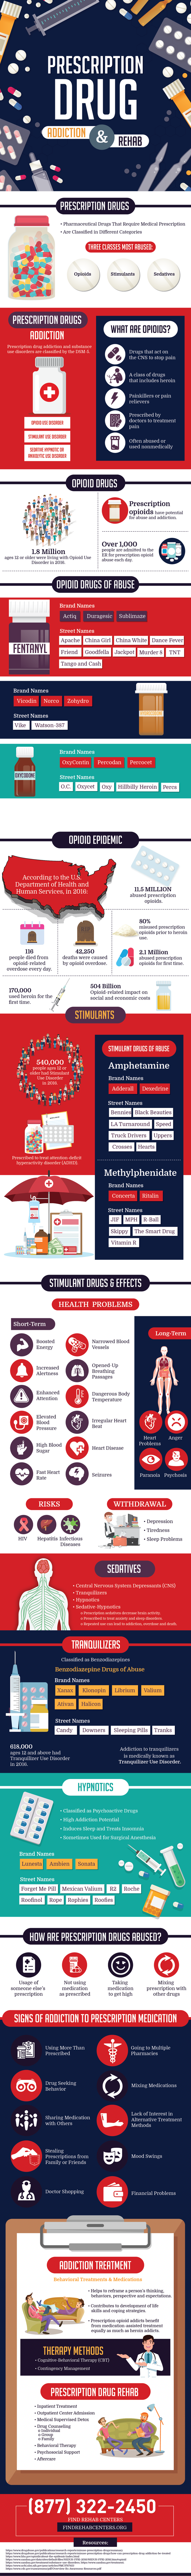 prescription drug abuse infographic